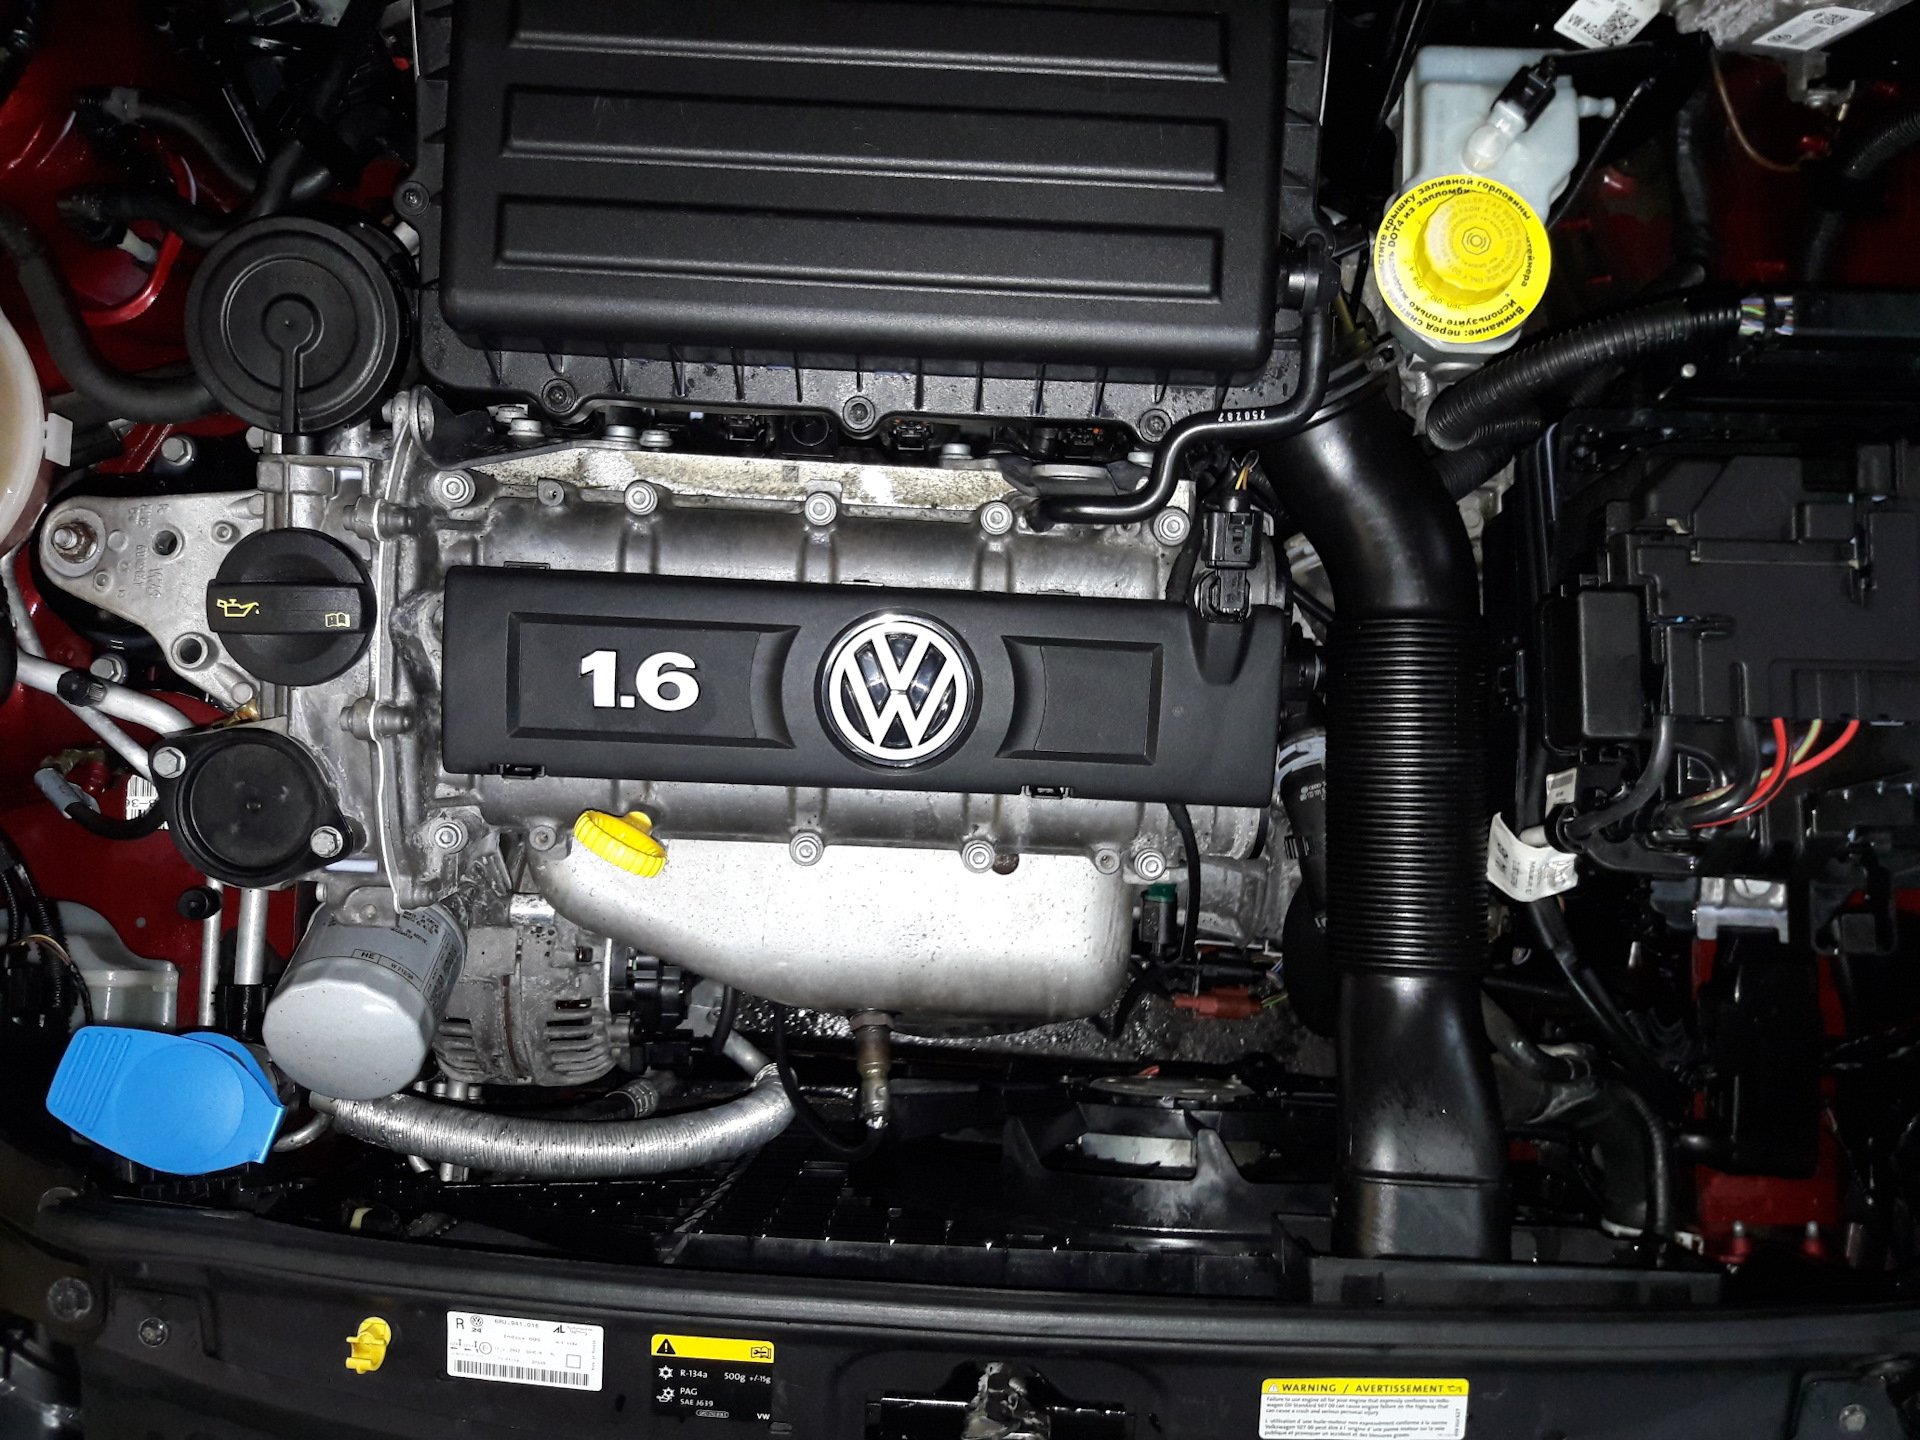 Volkswagen polo мотор. Фольксваген поло ДВС 1.6. Мотор Фольксваген поло седан 1.6. Двигатель Фольксваген поло 1.6. Двигатель поло седан 1.6.